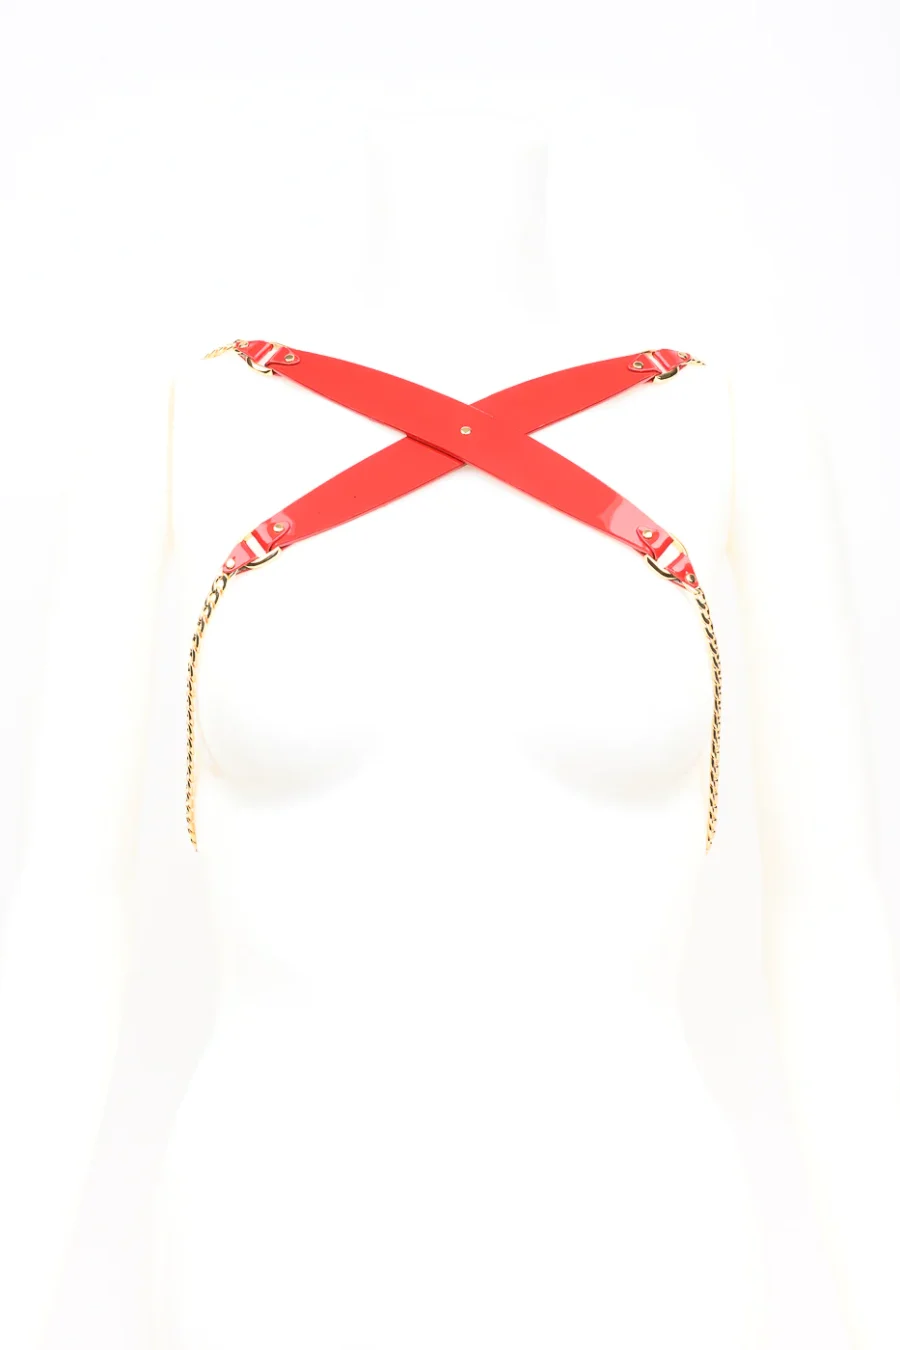 Fraulein Kink Roja Chain Harness 5